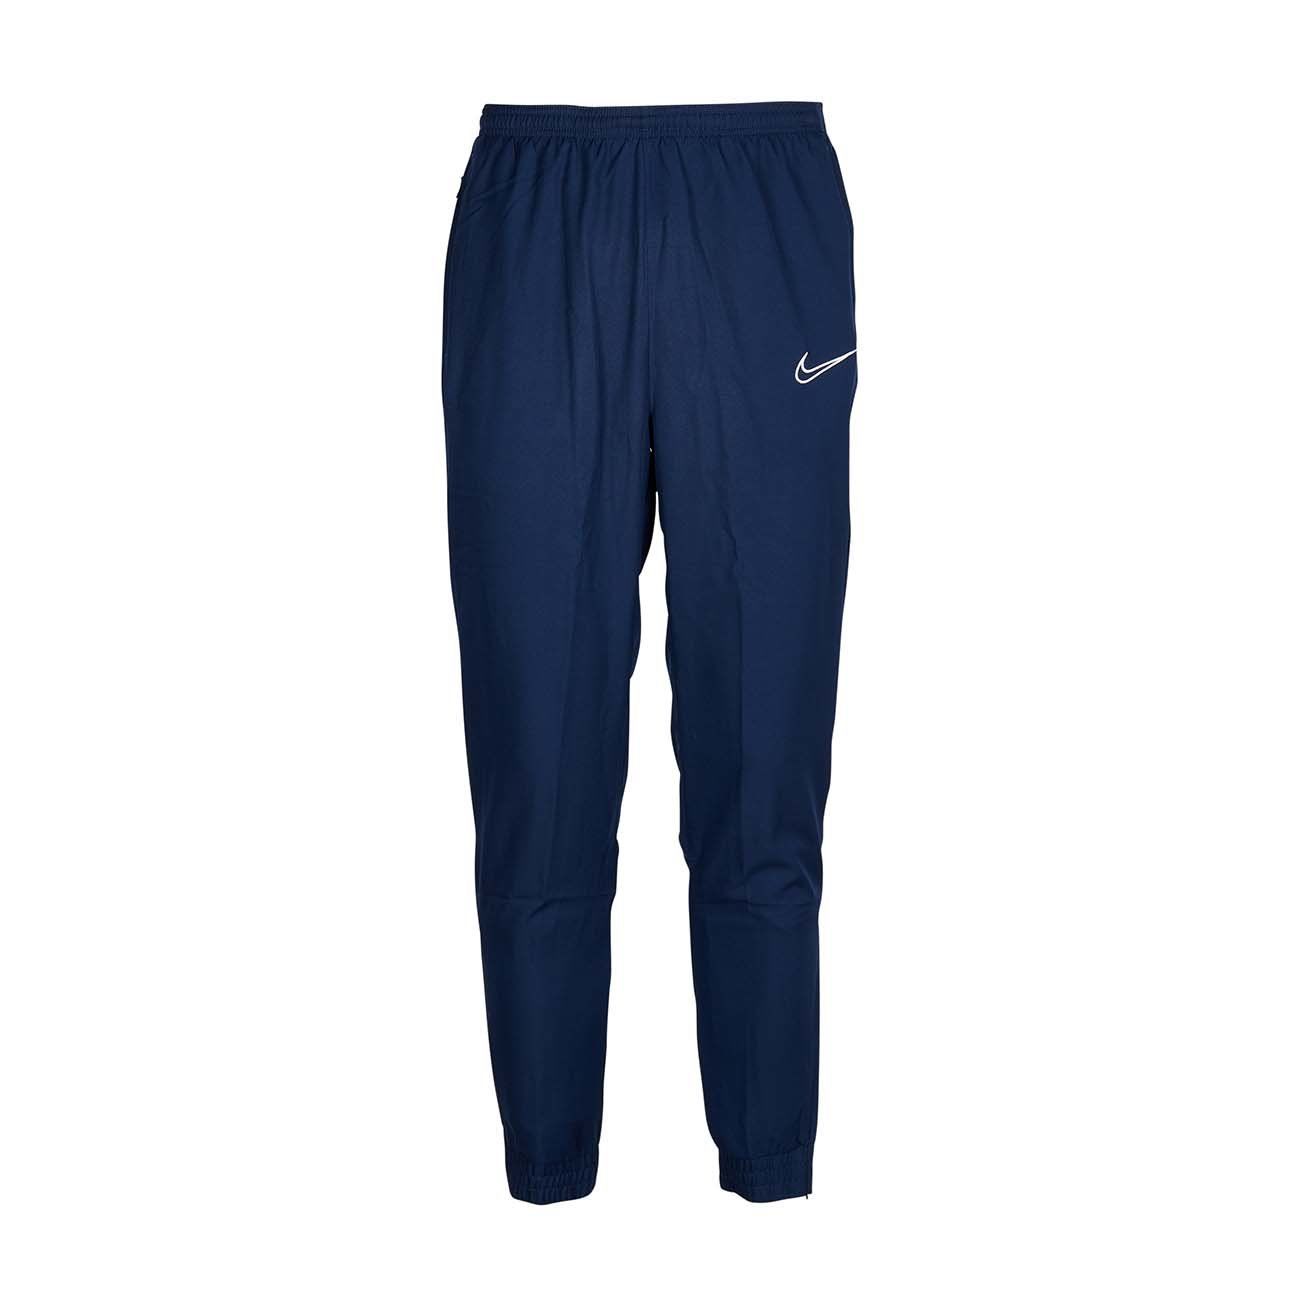 Nike Men's Dri-Fit Thermal Pants, Black/Anthracite/Reflective Silver, 2XL X  31 : Amazon.in: Fashion